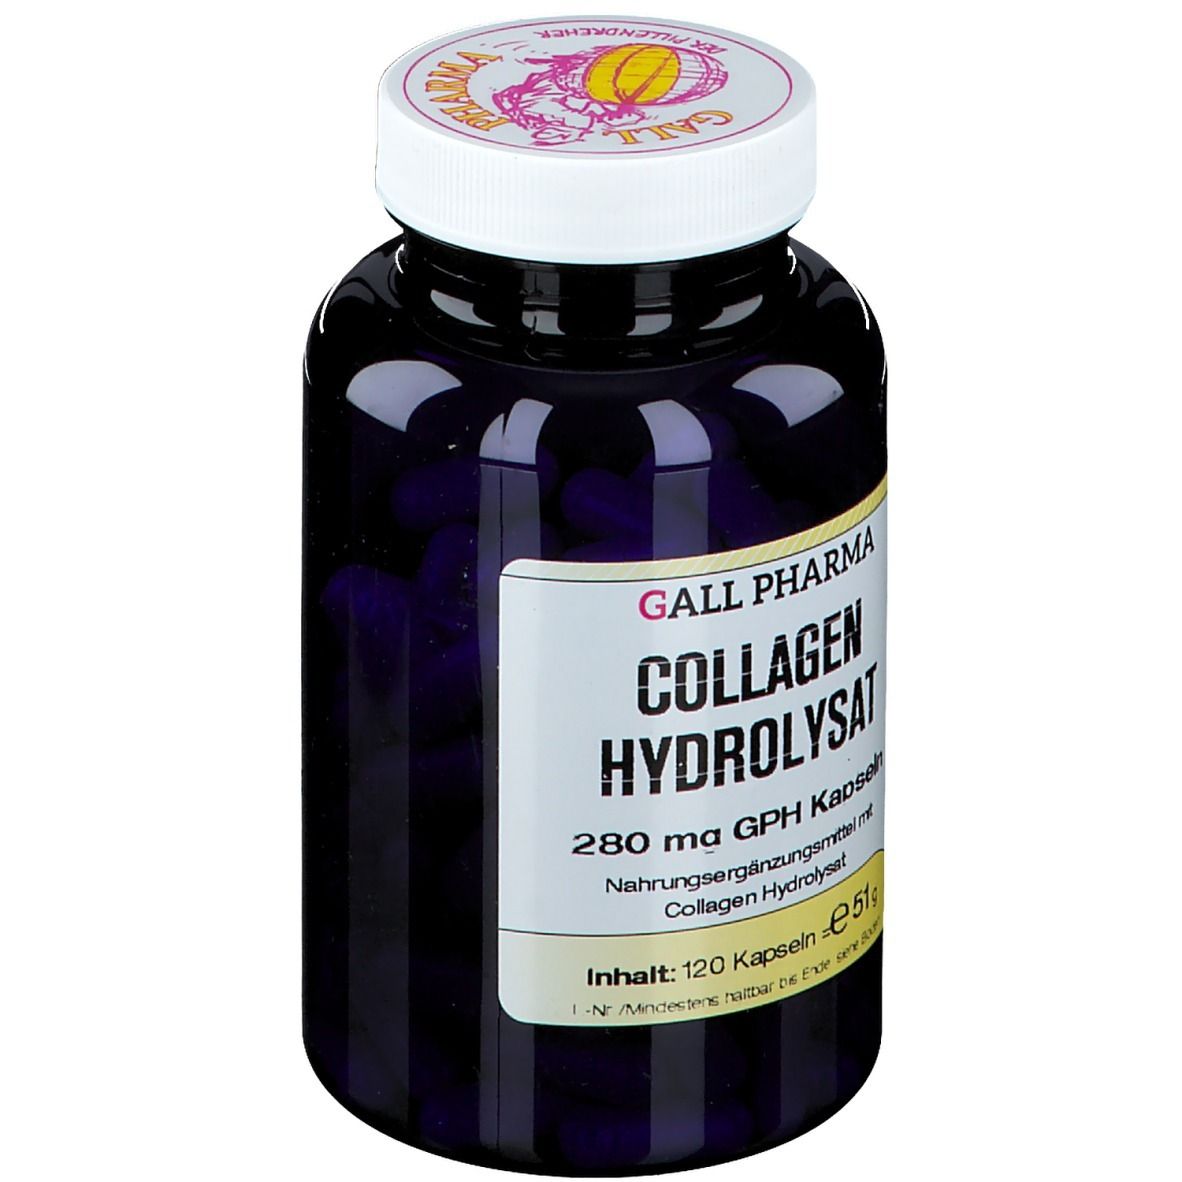 GALL PHARMA Collagen Hydrolysat 280 mg GPH Kapseln